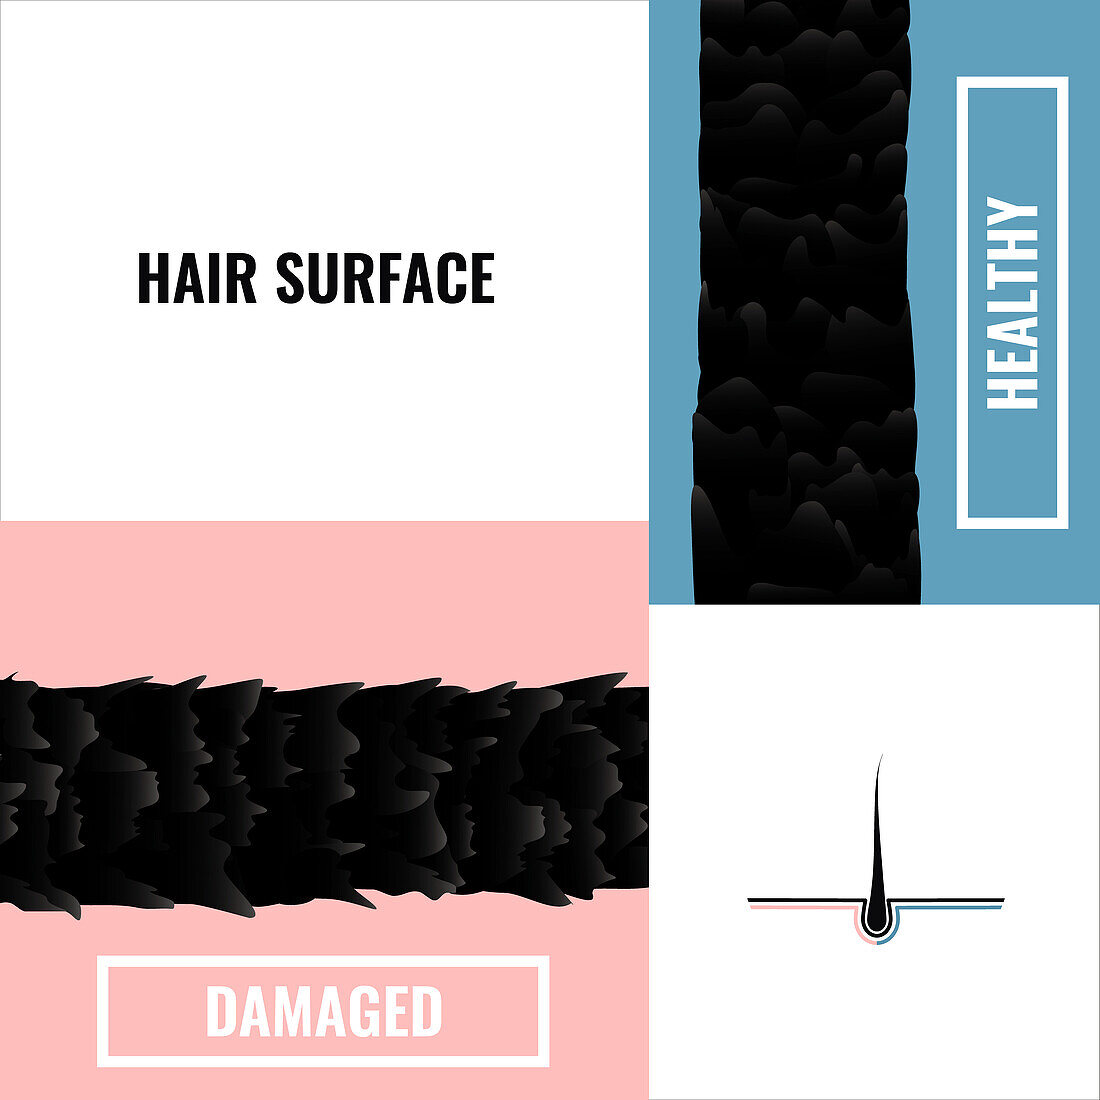 Hair health, conceptual illustration